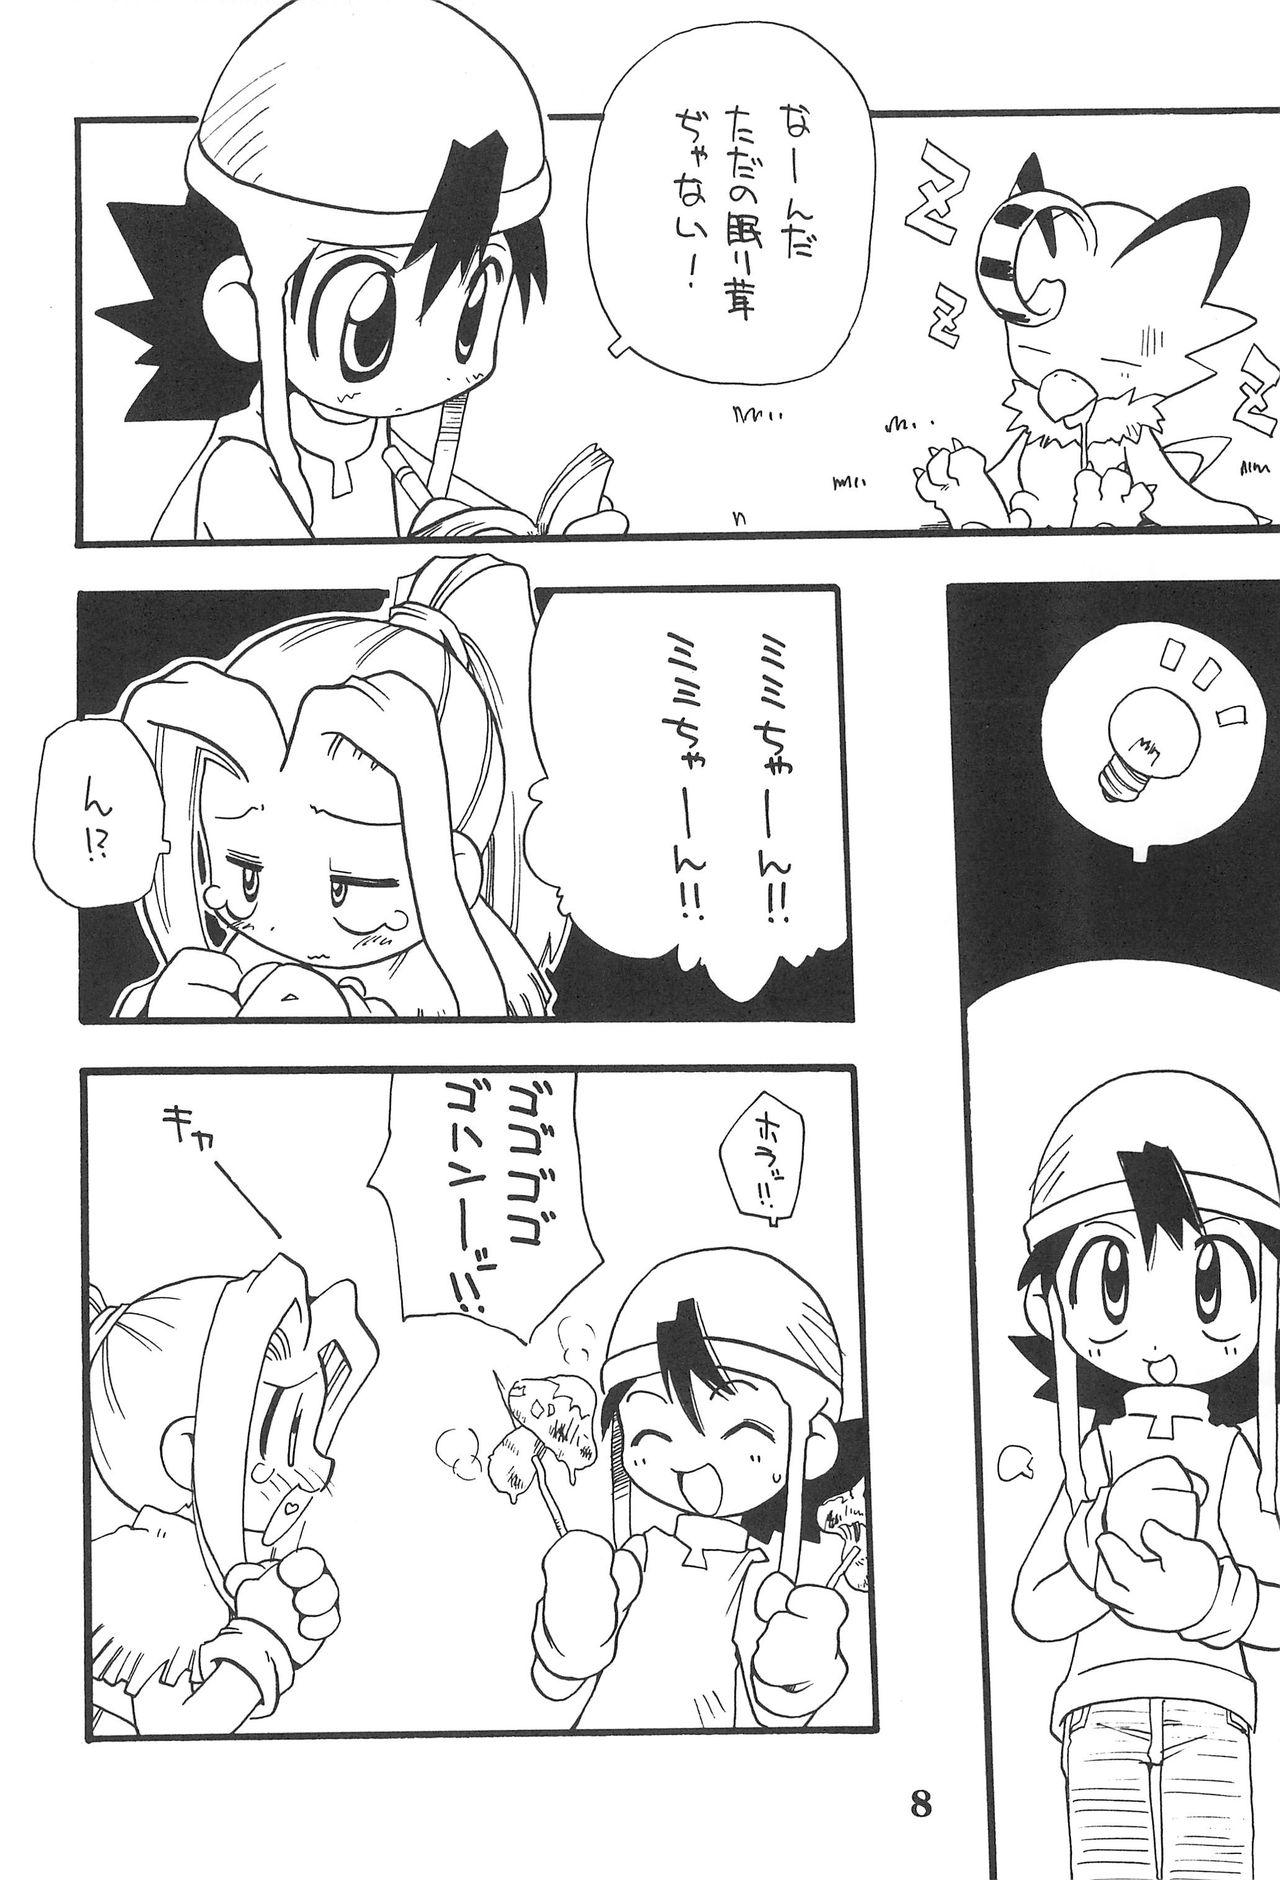 Gozando K8 KICHIKU BOOK8 COSTOM - Digimon adventure Cuzinho - Page 8